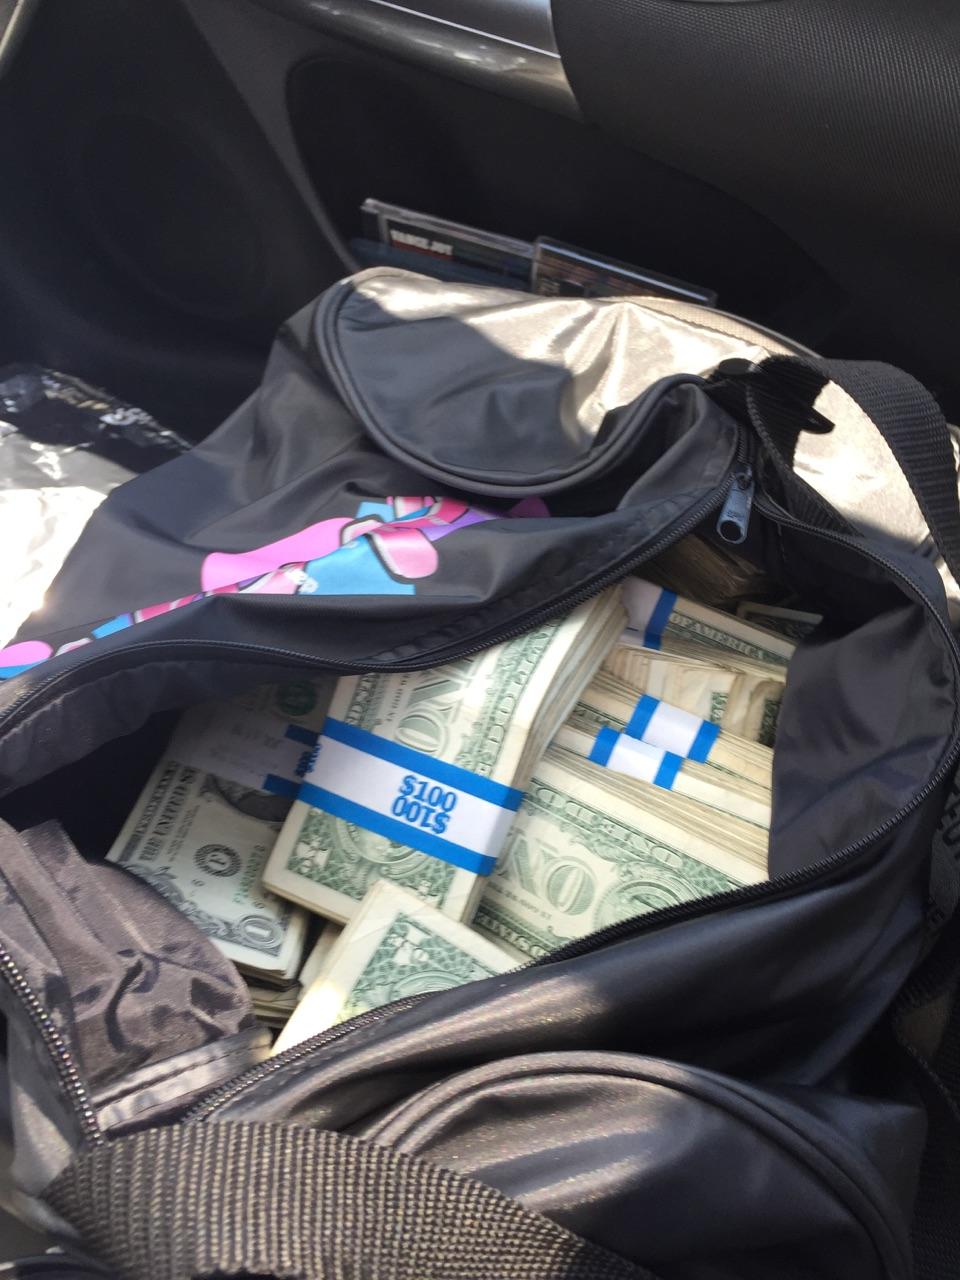 real money in duffle bag